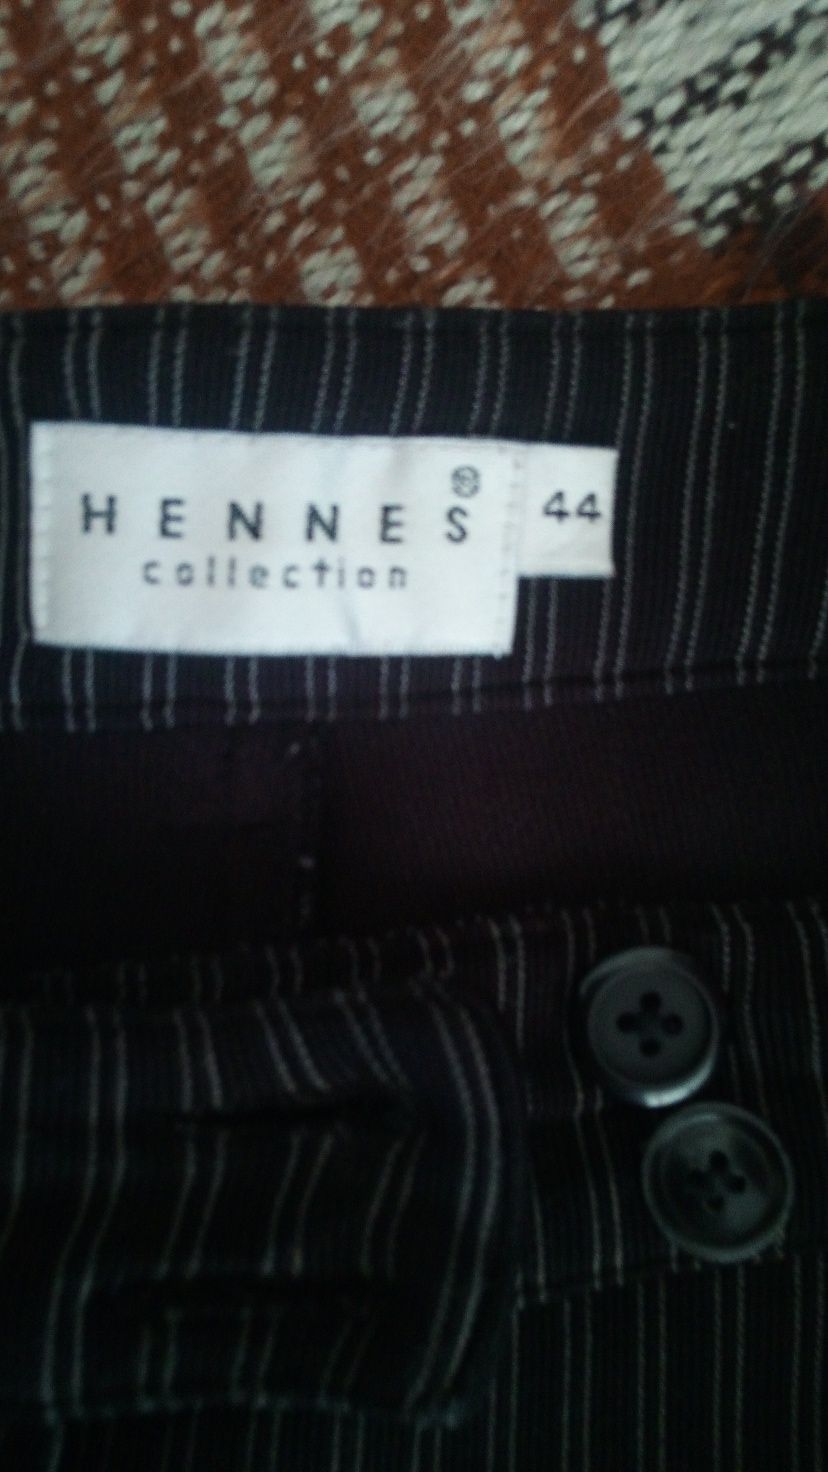 70. Spodnie damskie rozmiar 44 firmy HENNES